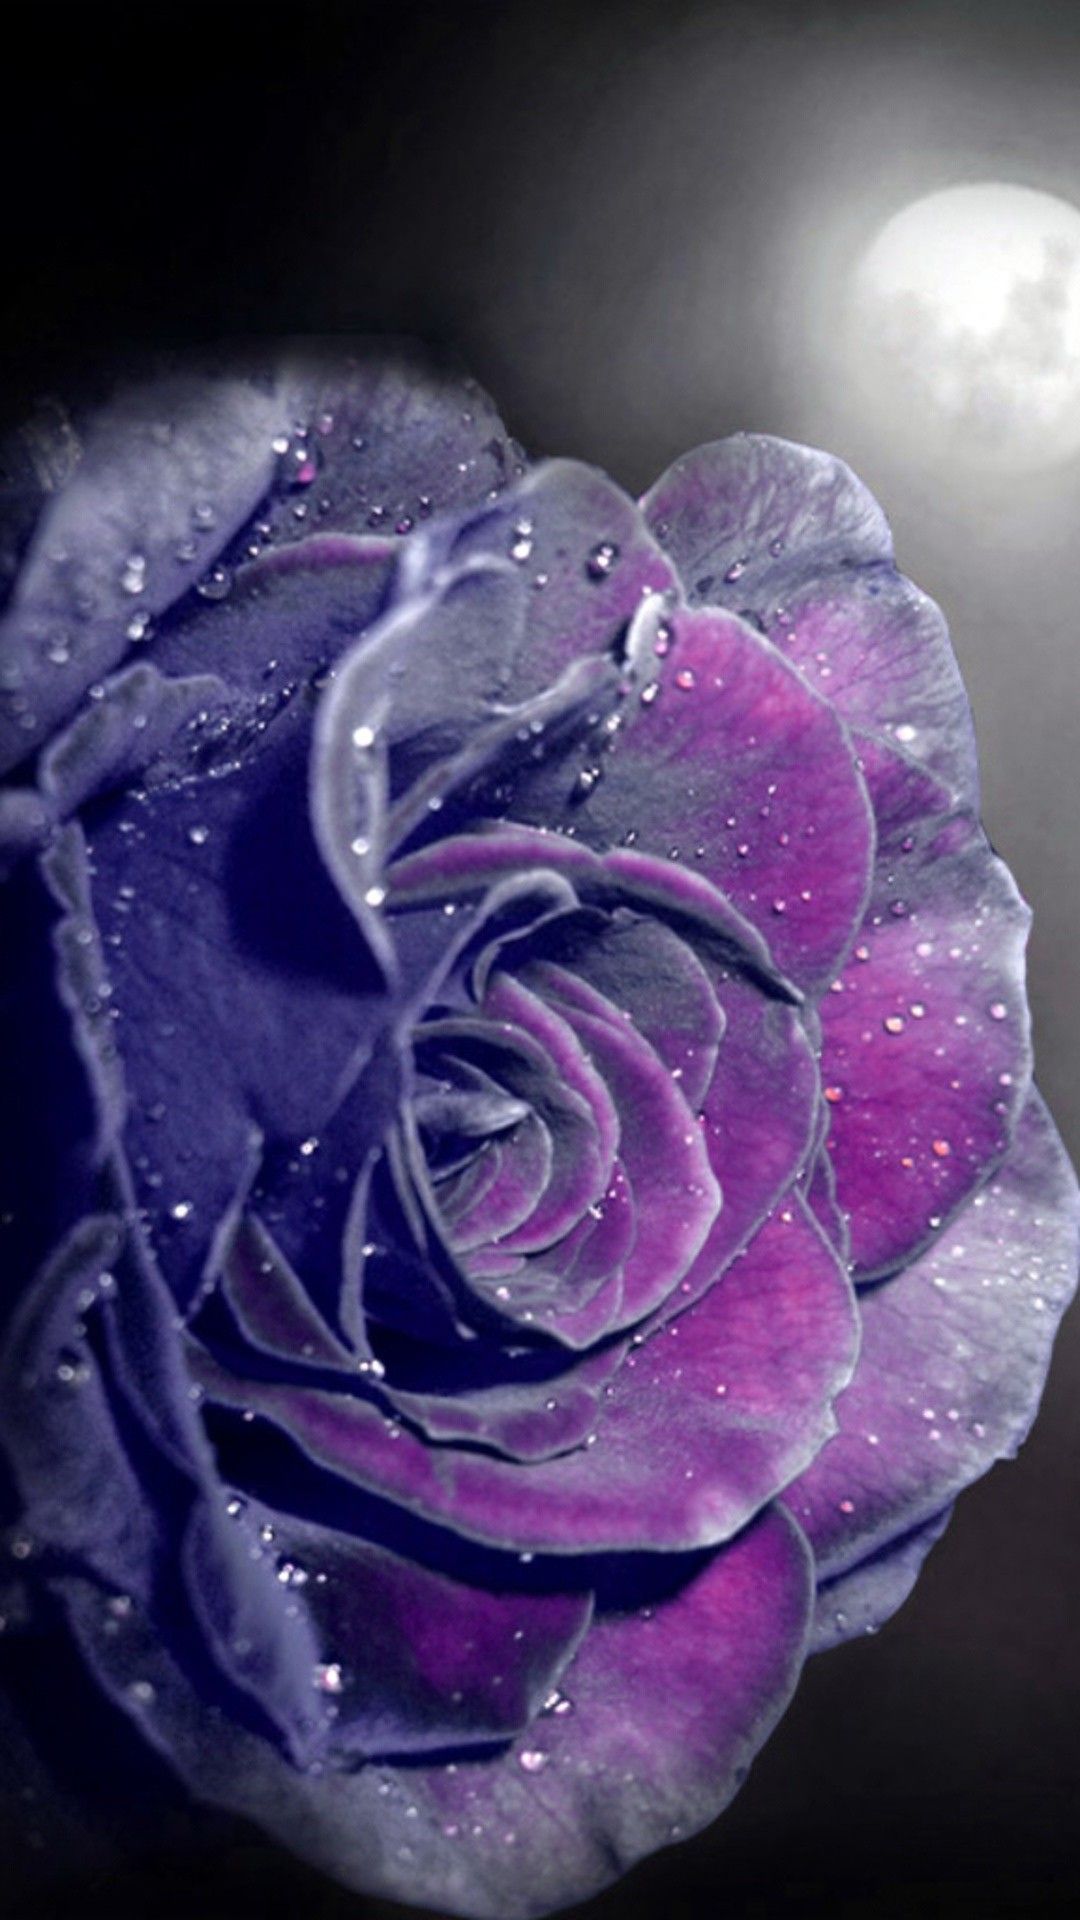 Purple Rose Wallpaper iPhone. Best HD Wallpaper. Purple roses wallpaper, Purple roses, Rose flower wallpaper